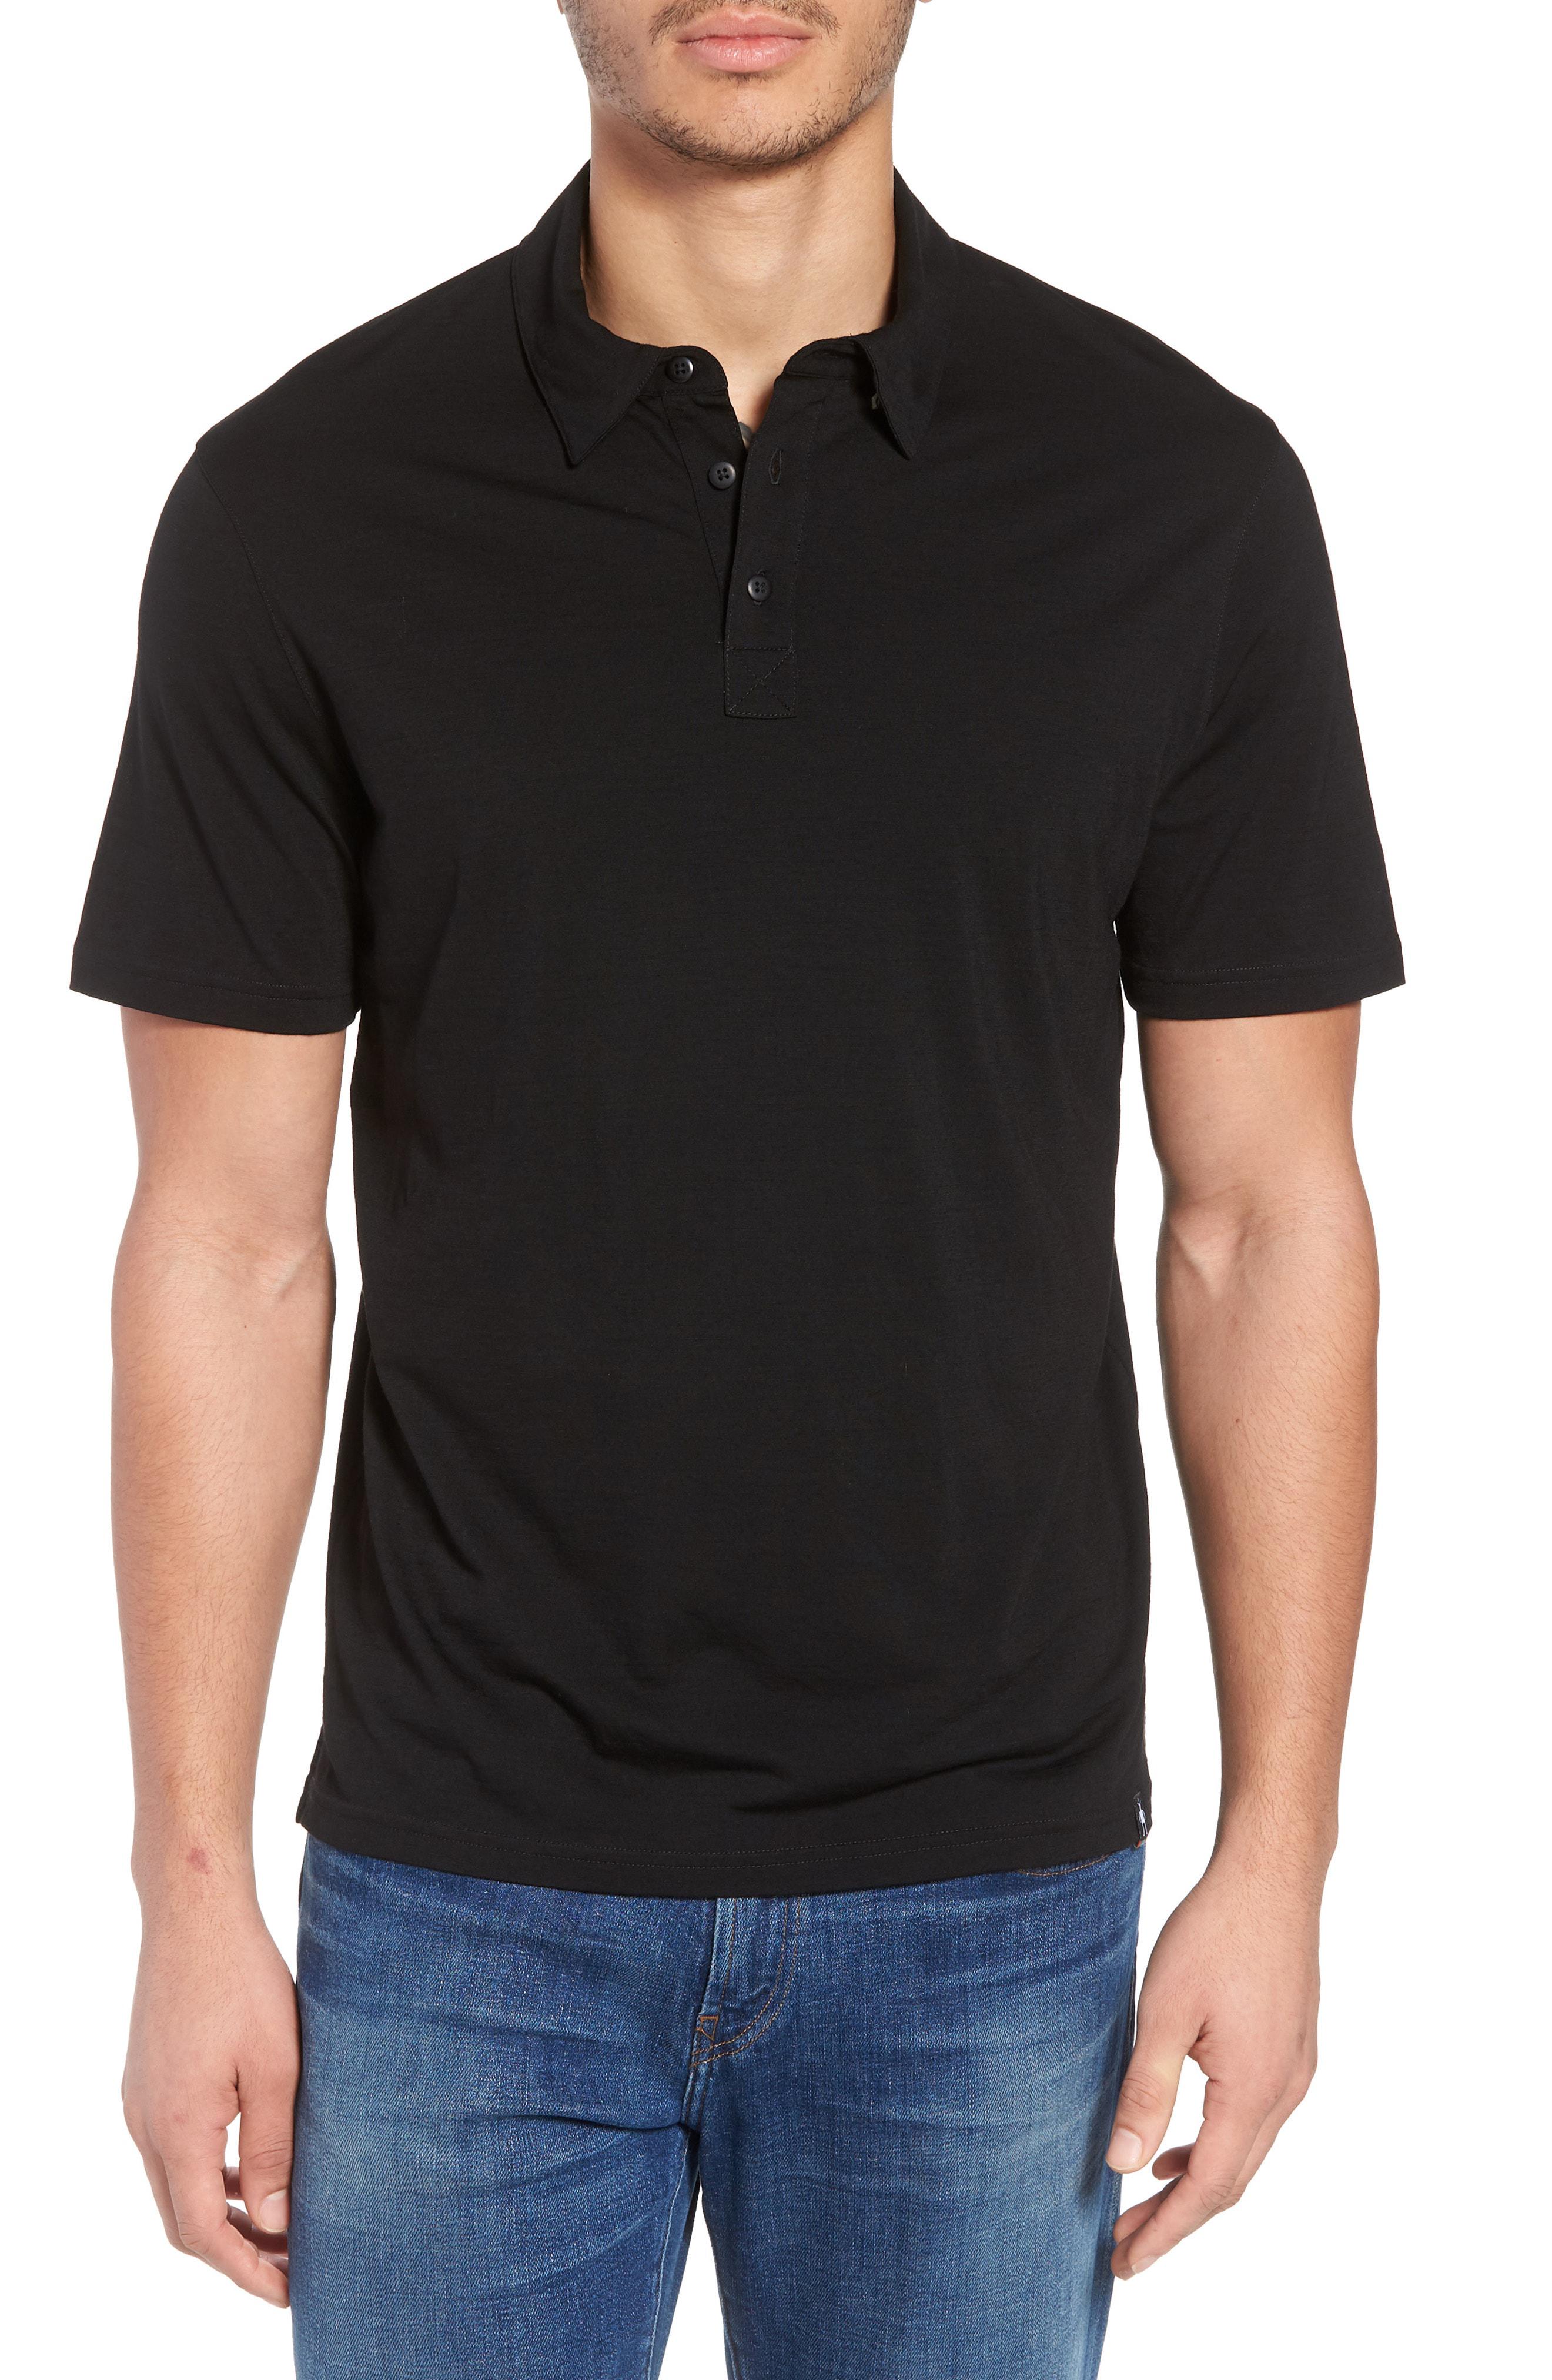 Lyst - Smartwool Merino 150 Wool Blend Polo Shirt in Black for Men